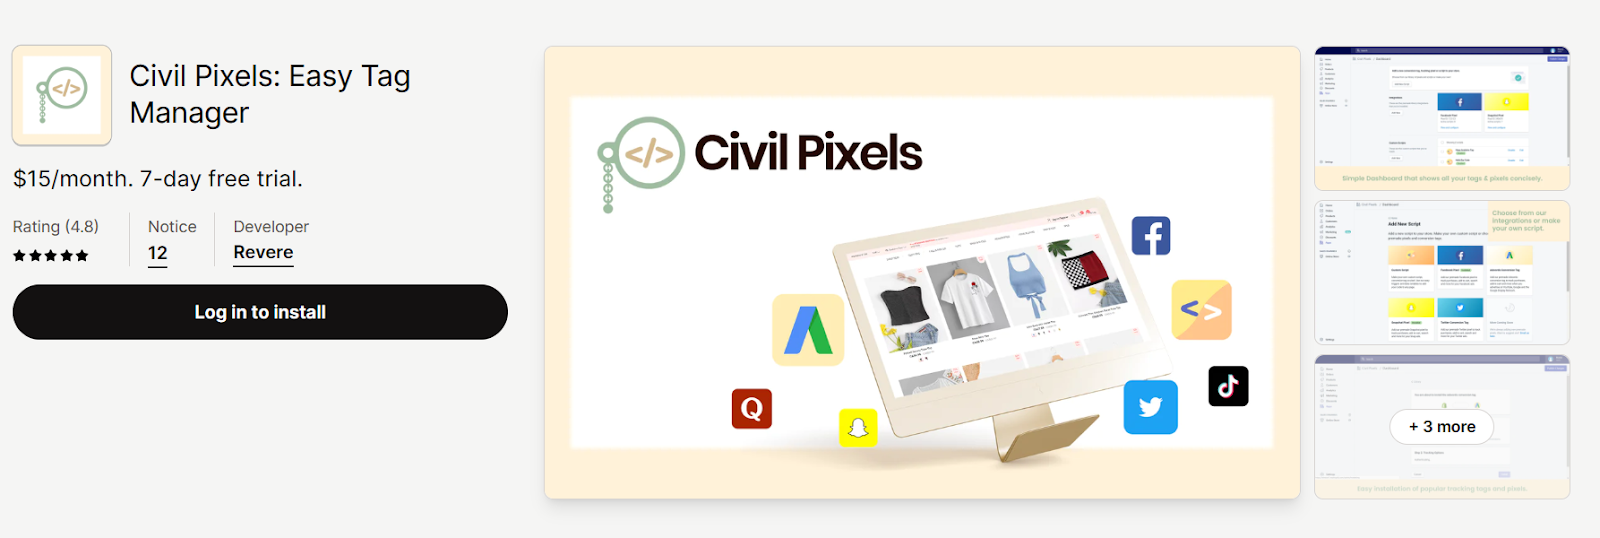 Civil Pixels: Easy Tag Manager